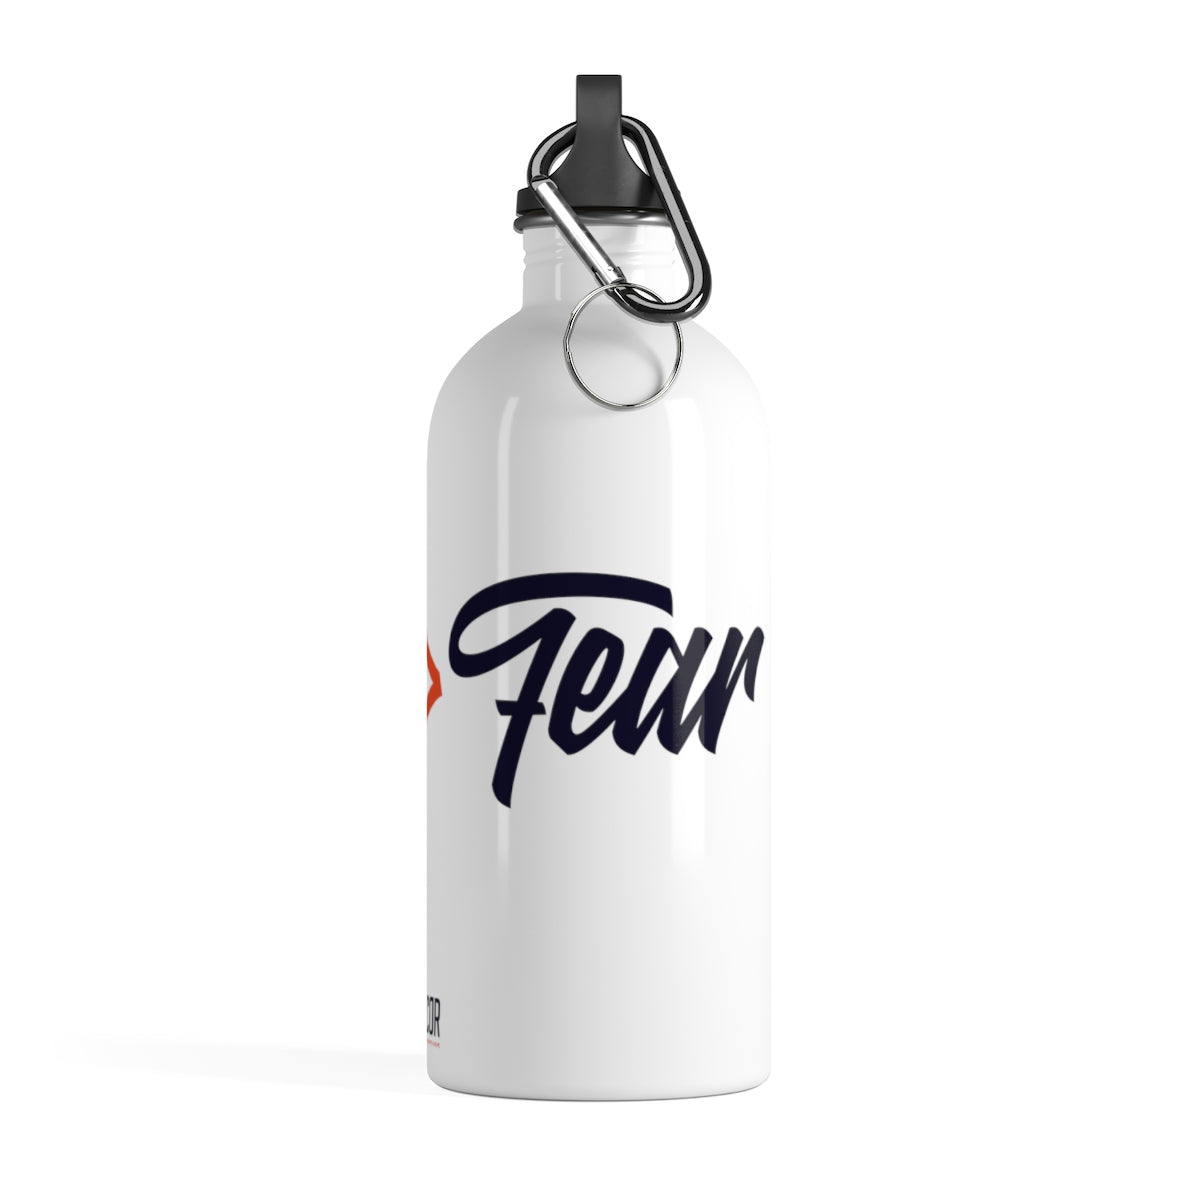 Faith > Fear | Stainless Steel Water Bottle